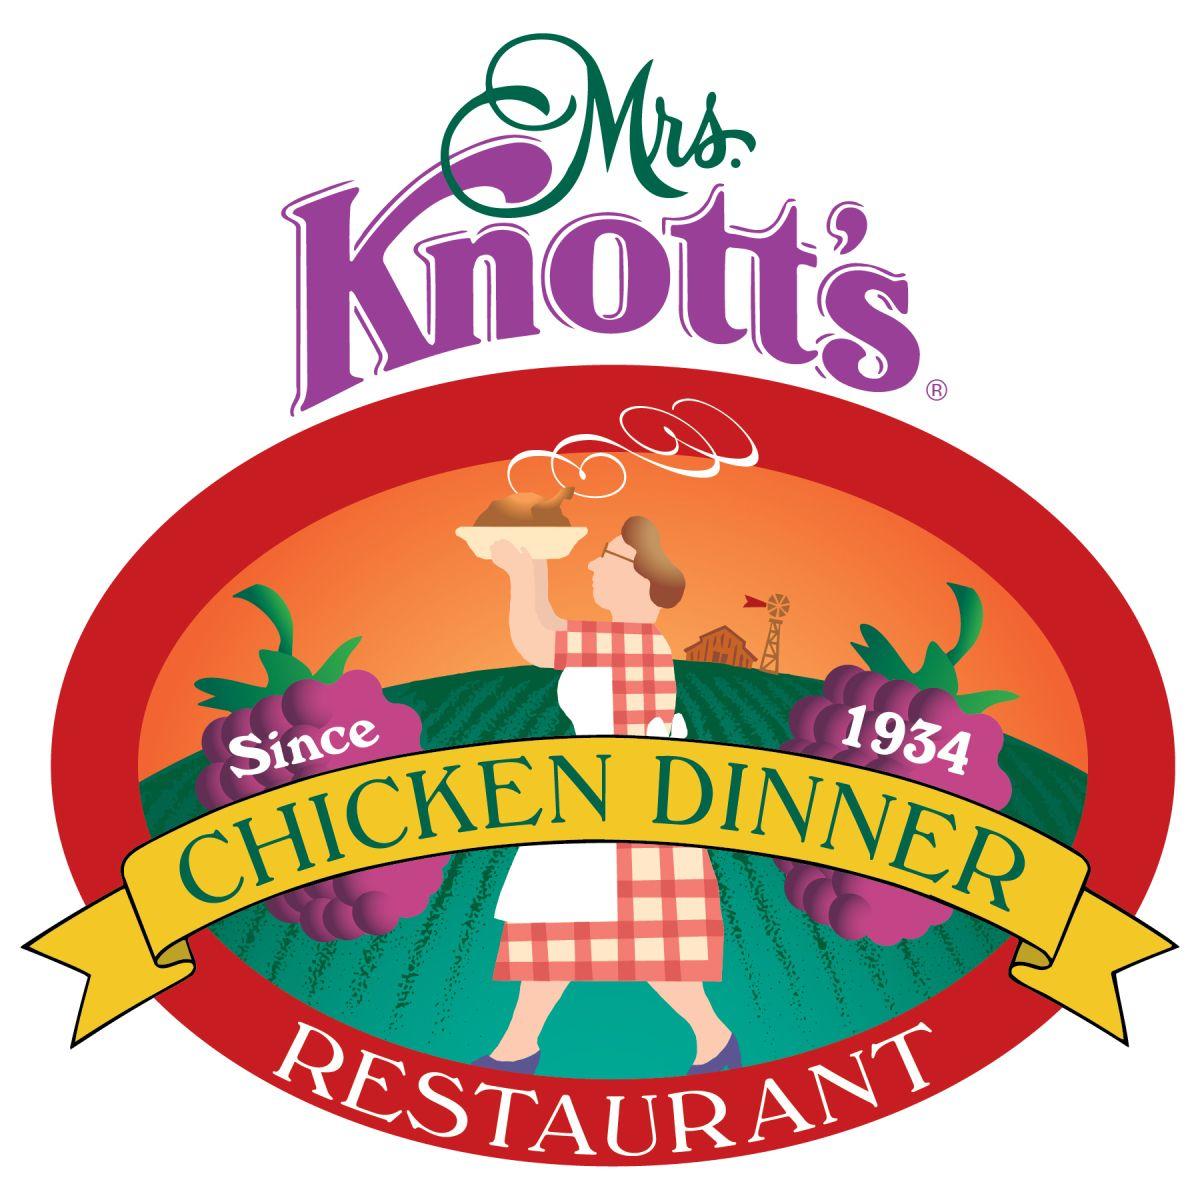 Knotts Logo - Complete Refurbishment Underway Of Mrs. Knott's Chicken Dinner